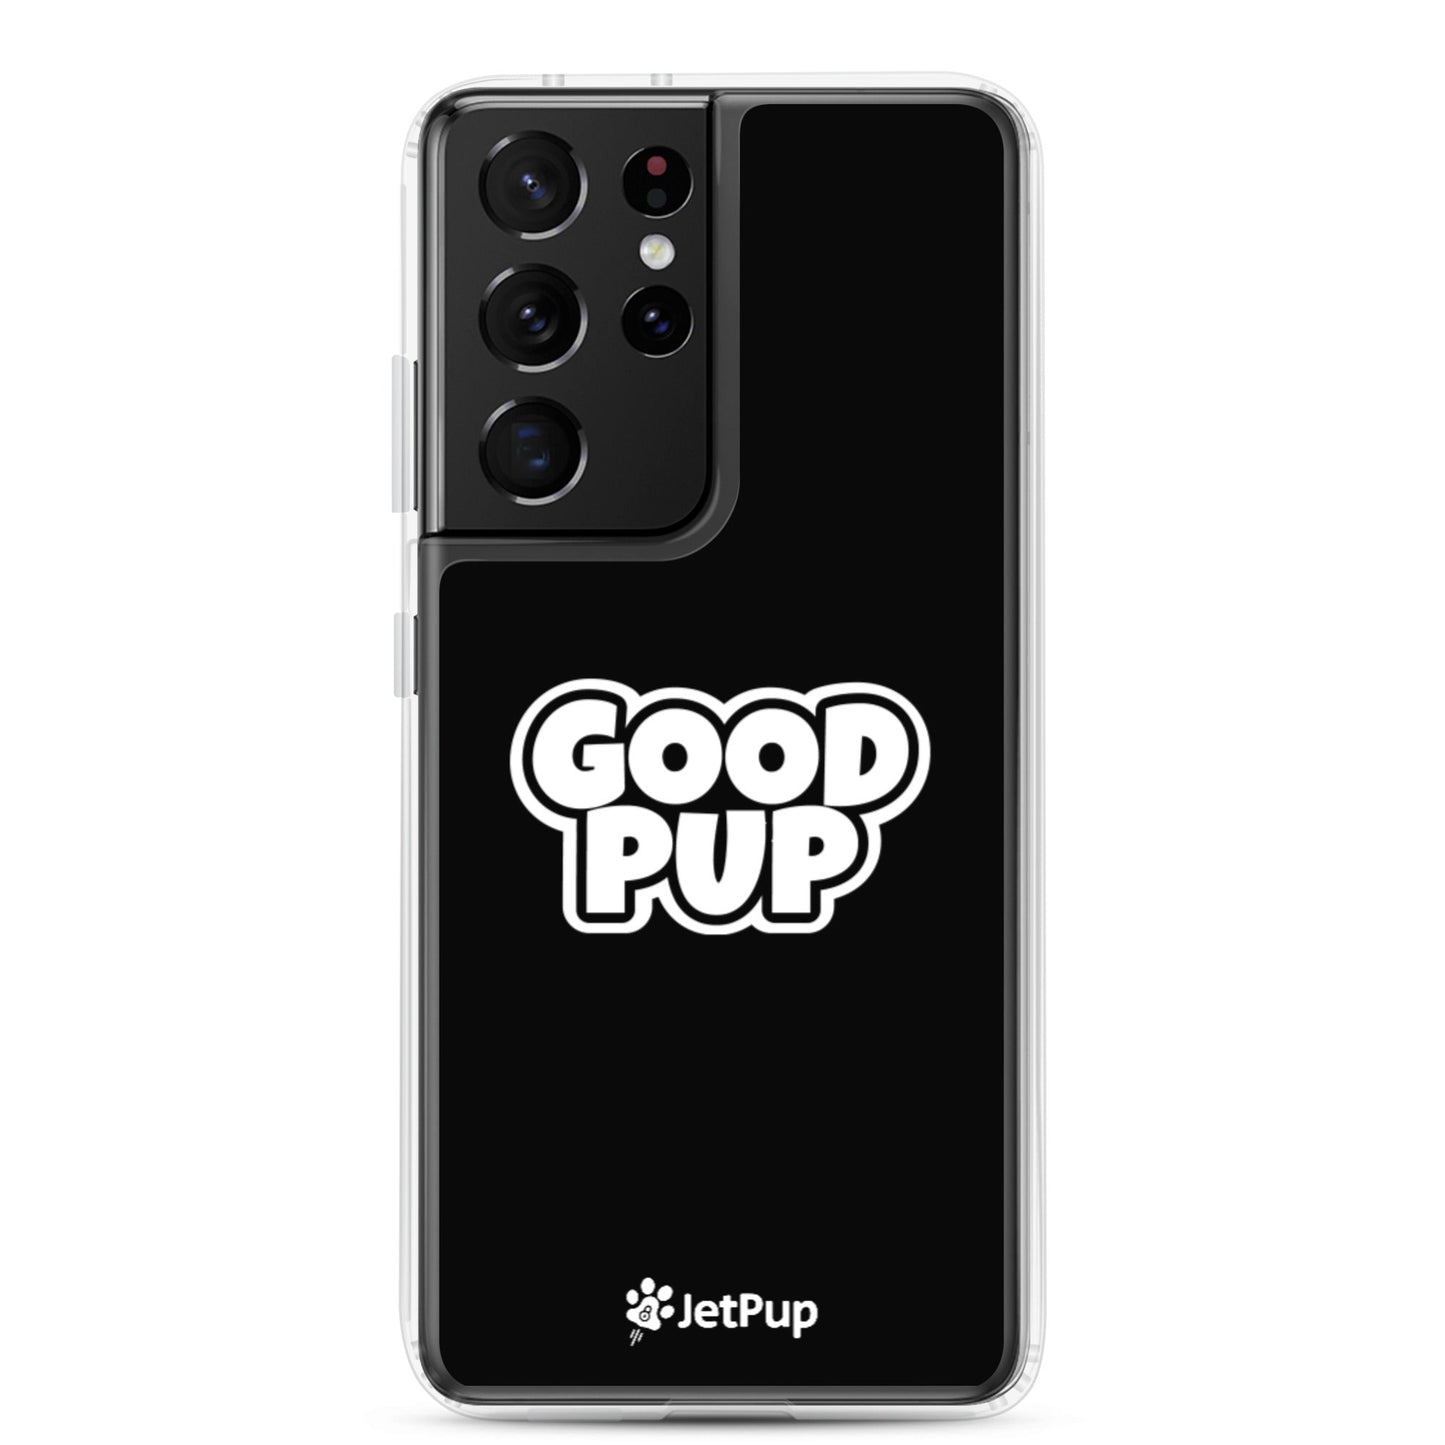 Good Pup Samsung Case - Black - JetPup